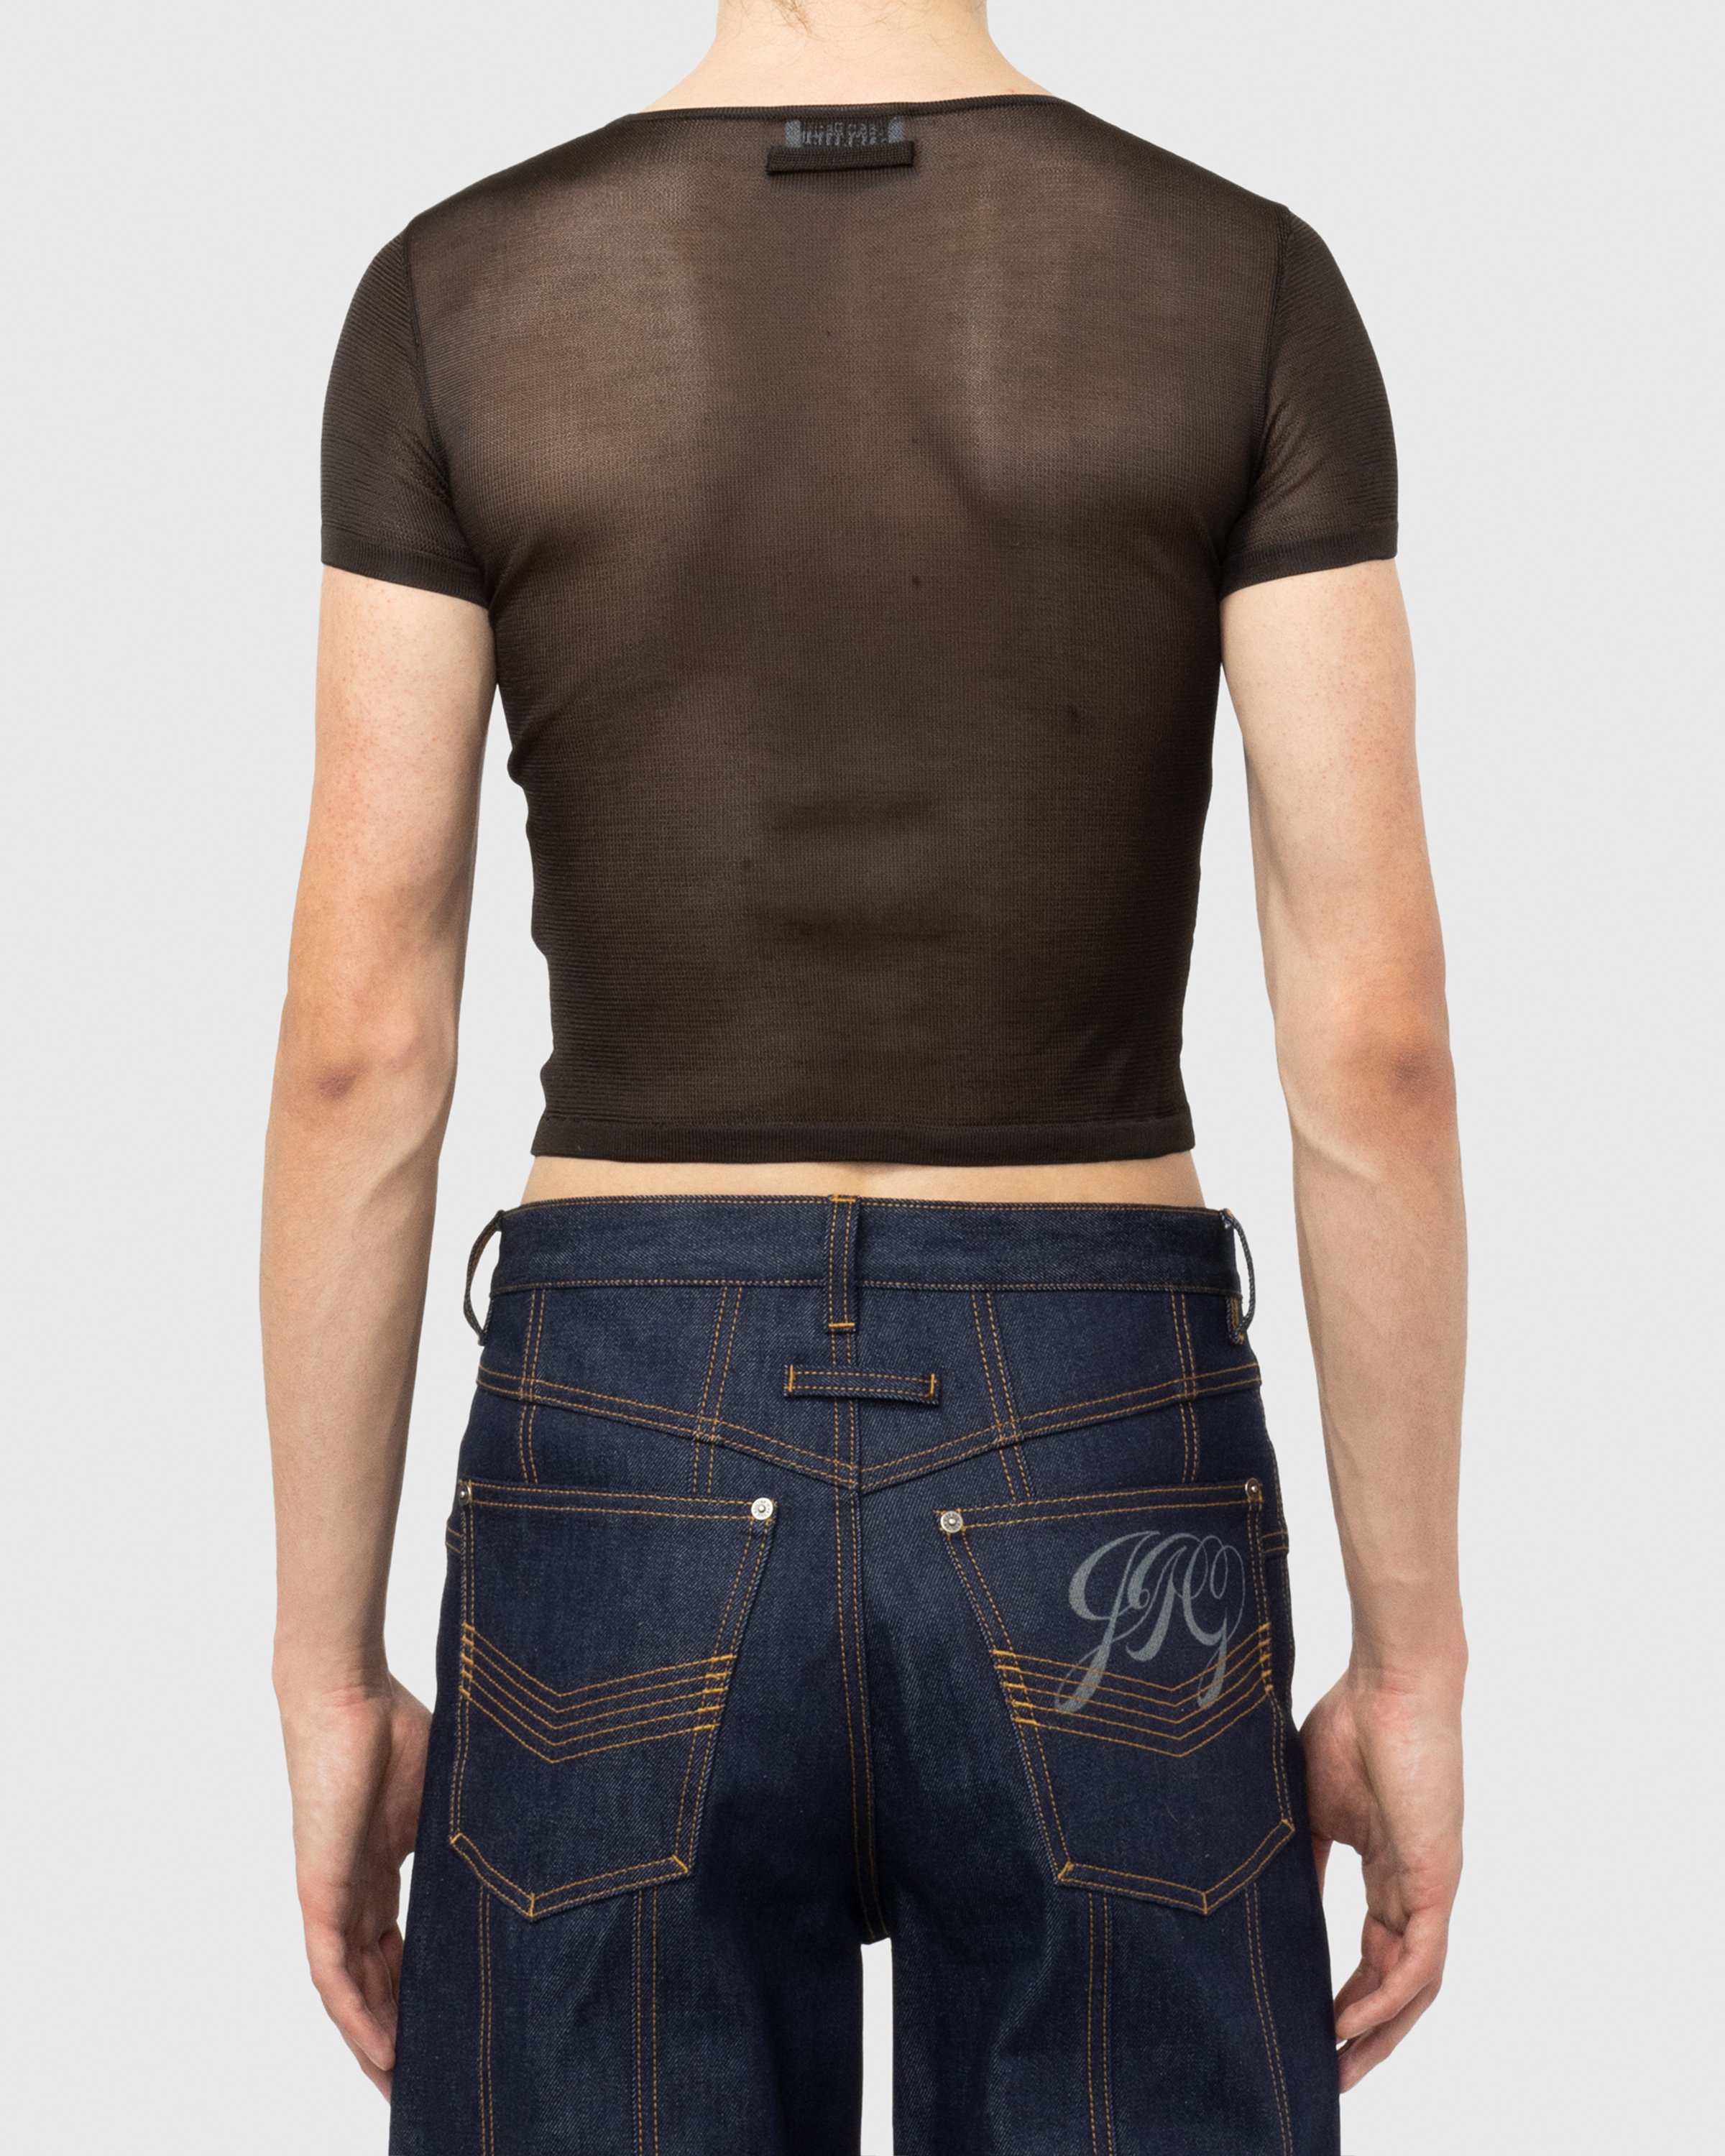 Jean Paul Gaultier - Open-Worked JPG Heart T-Shirt Dark Brown - Clothing - Brown - Image 2